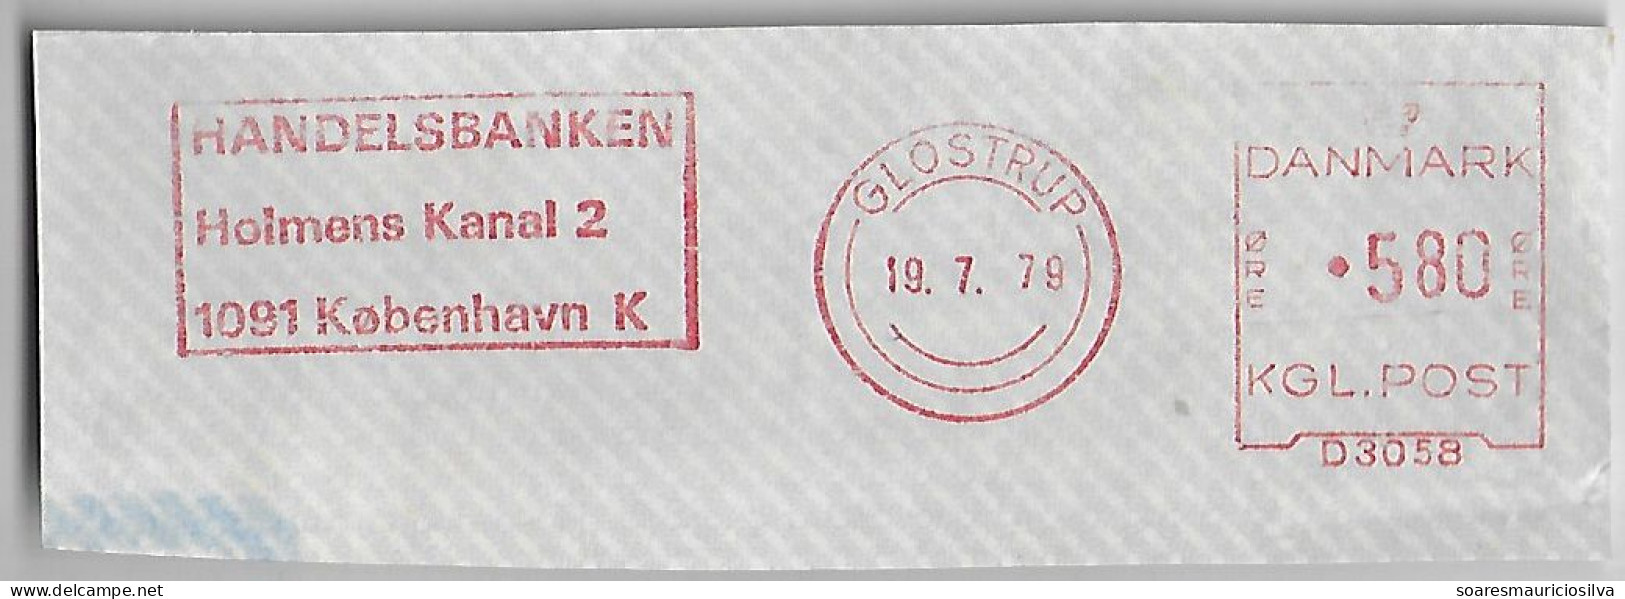 Denmark 1979 Fragment Cover Meter Stamp Francotyp Slogan Handelsbanken From Glostrup - Storia Postale